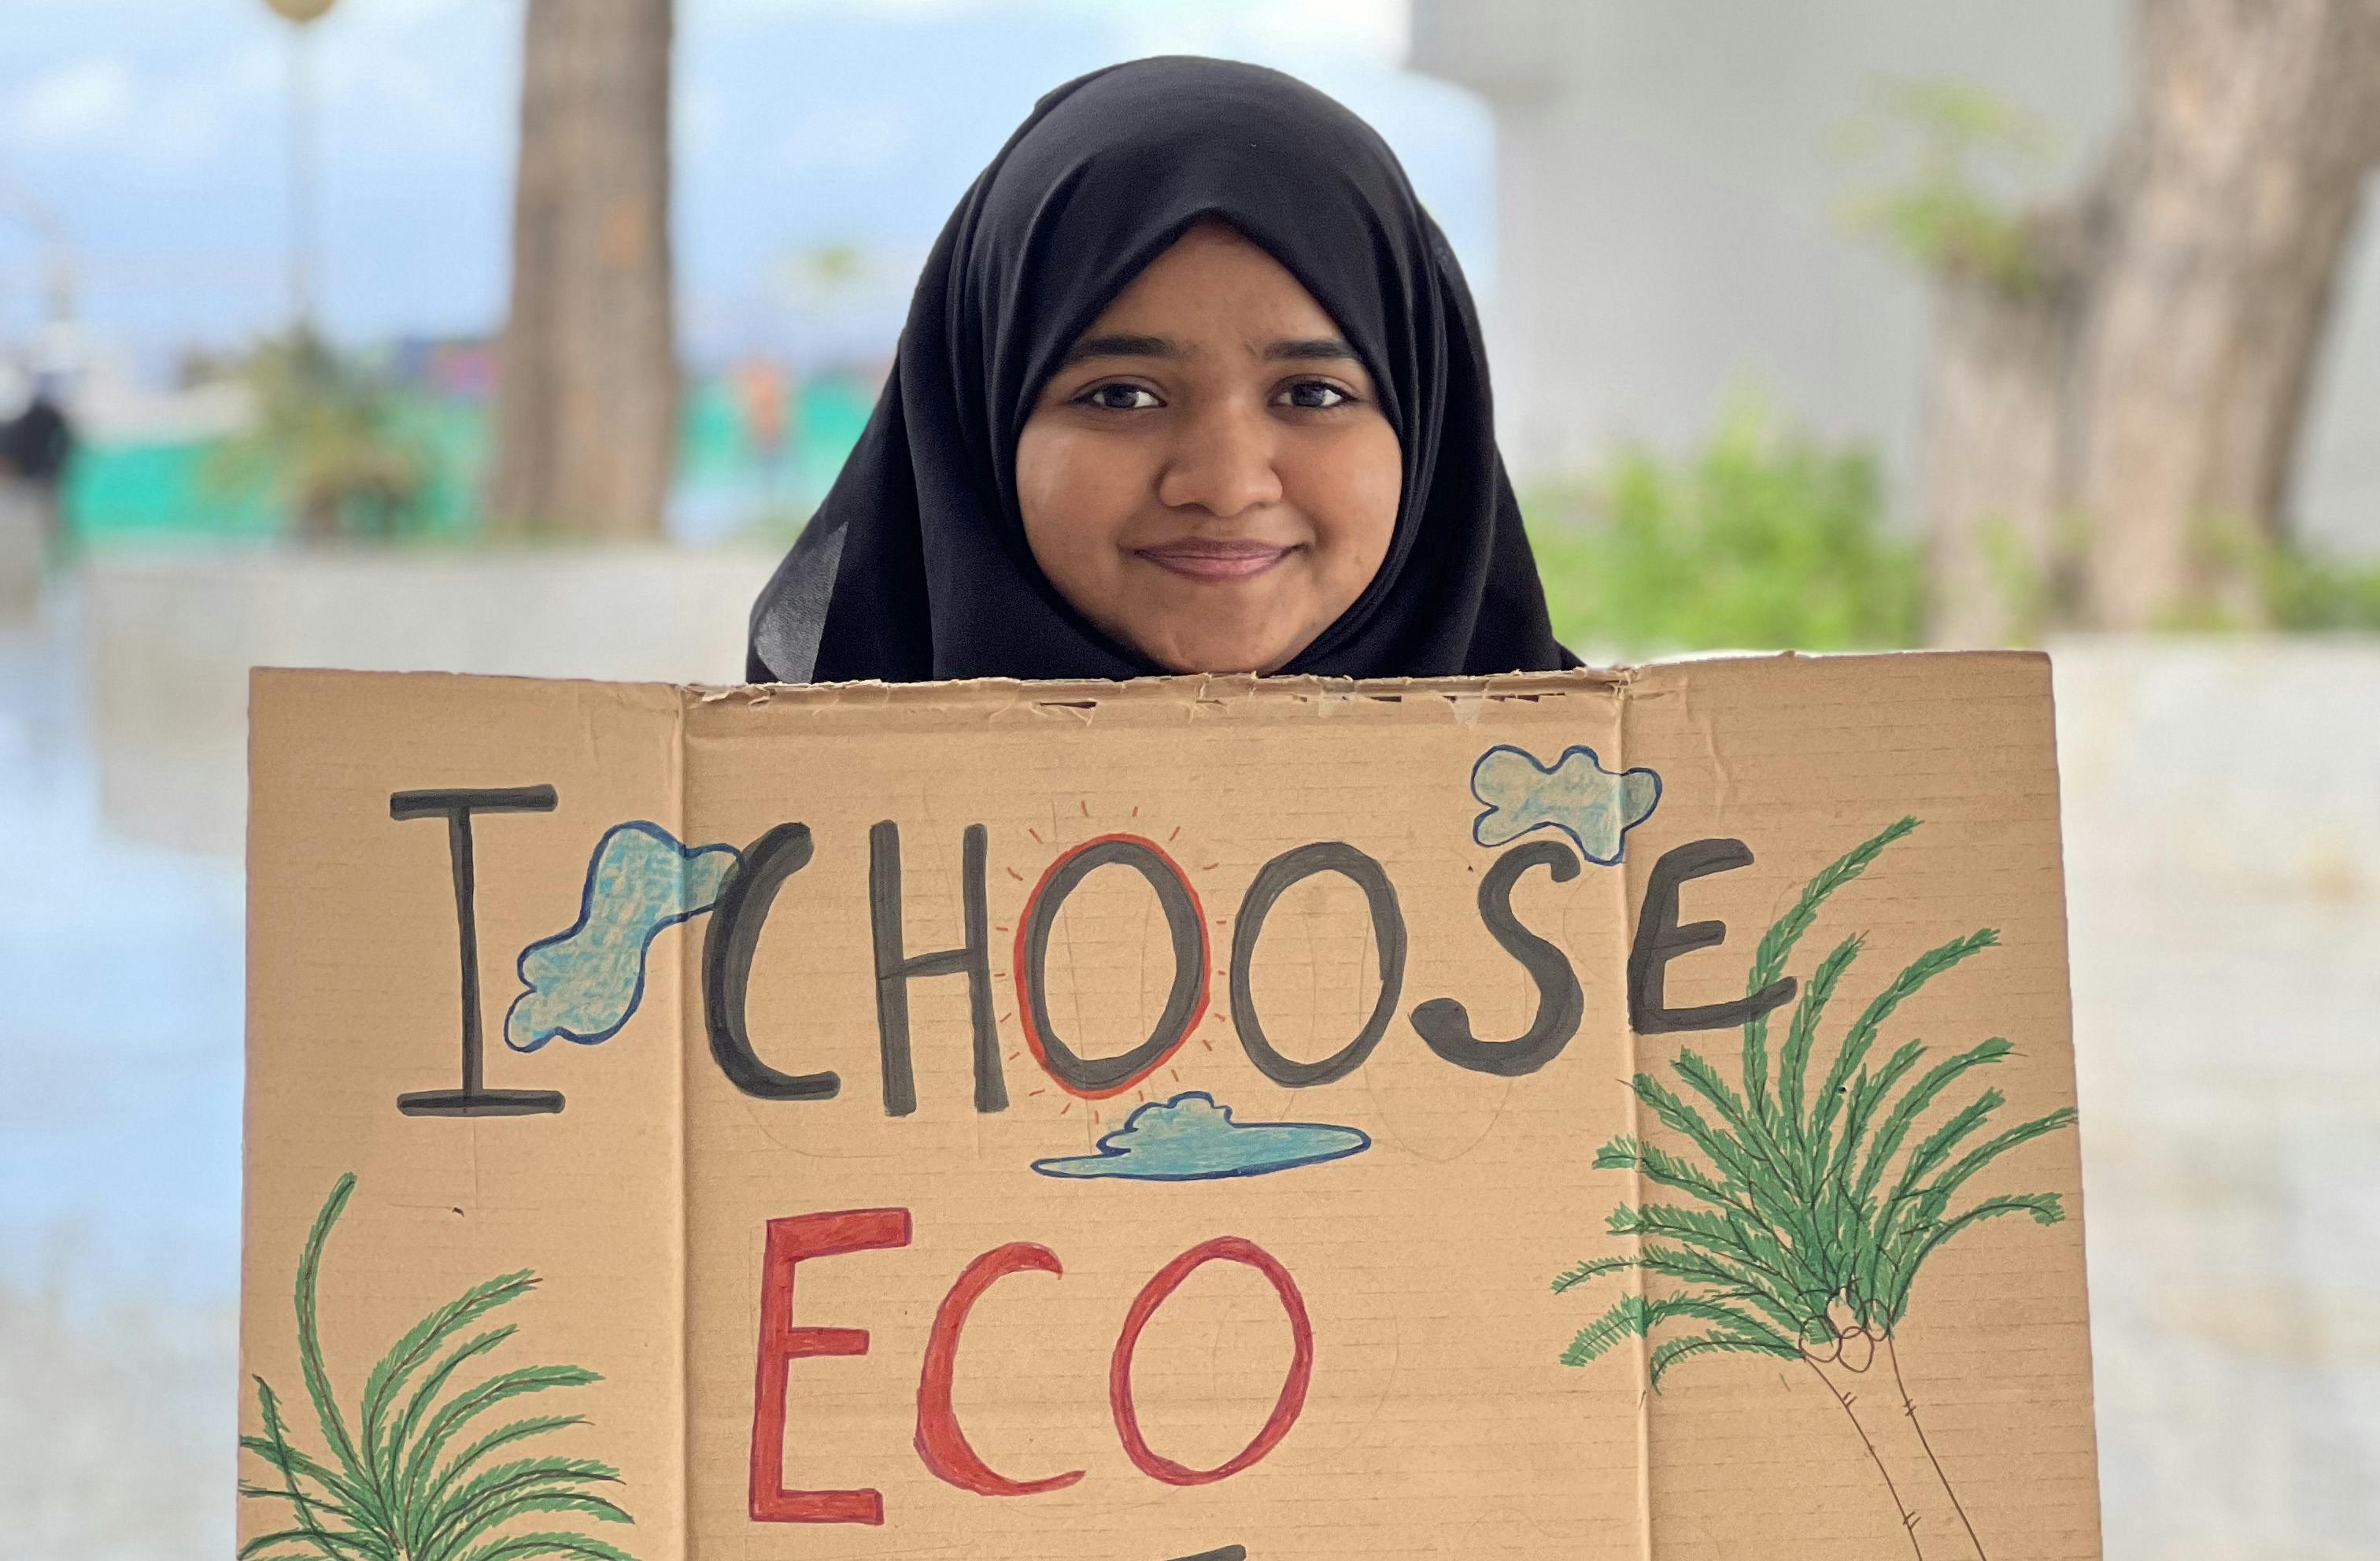 child holding sign that says 'I choose eco"